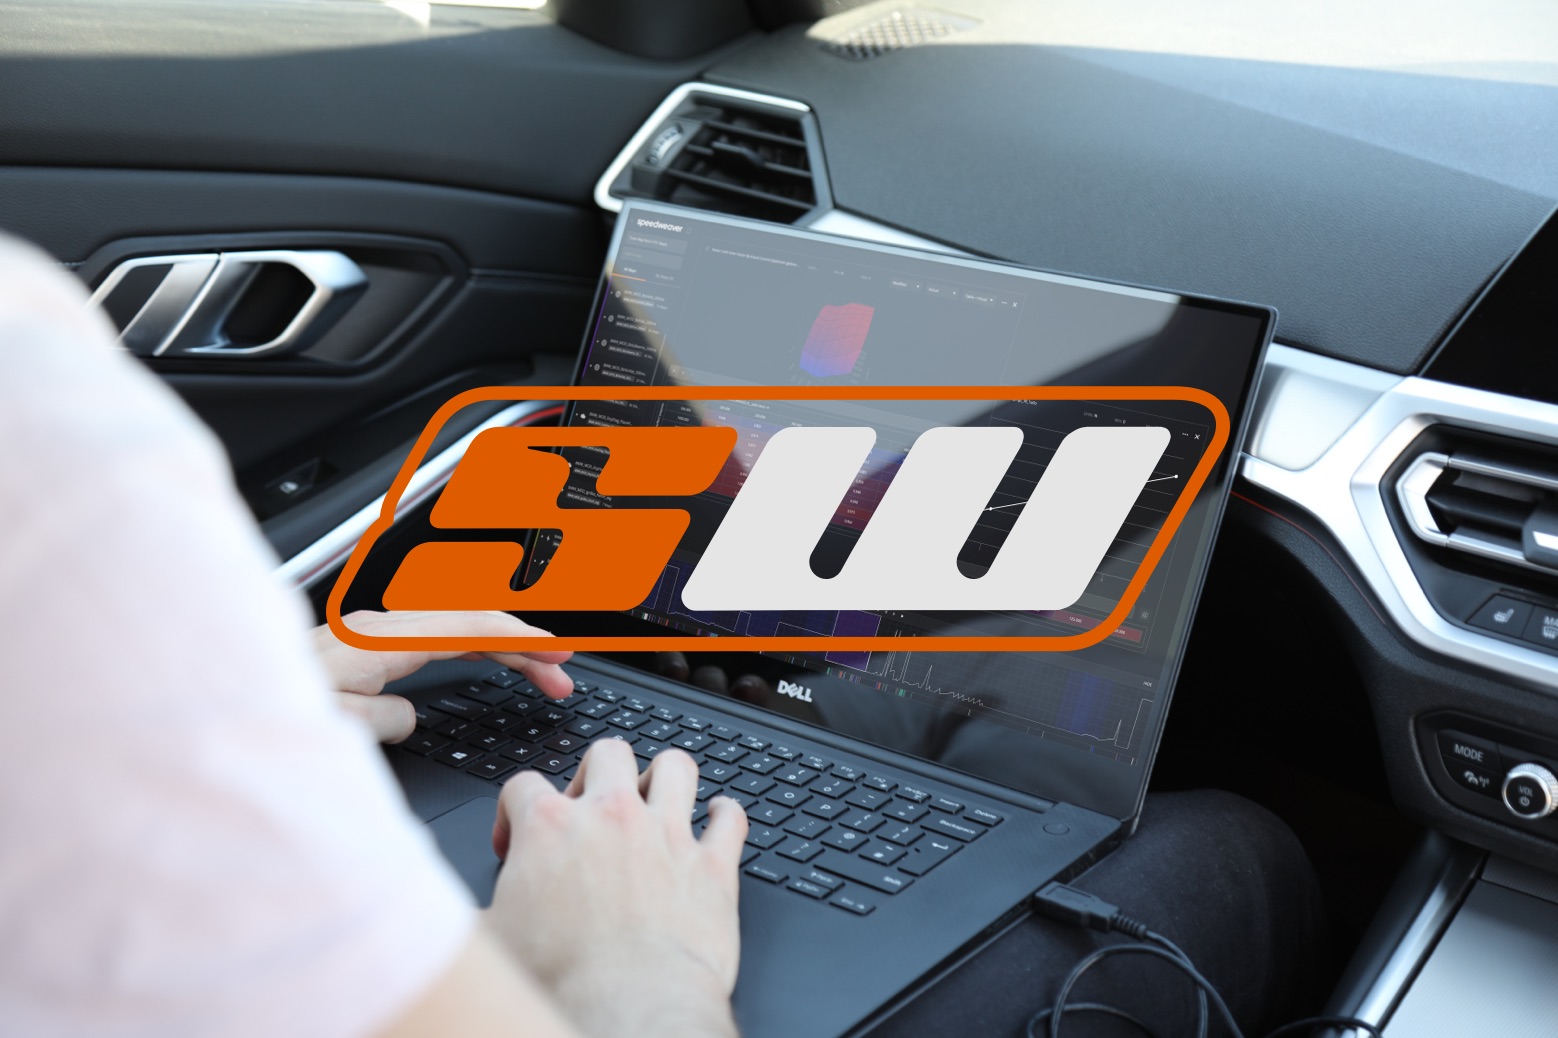 Browser based vehicle calibration editing software